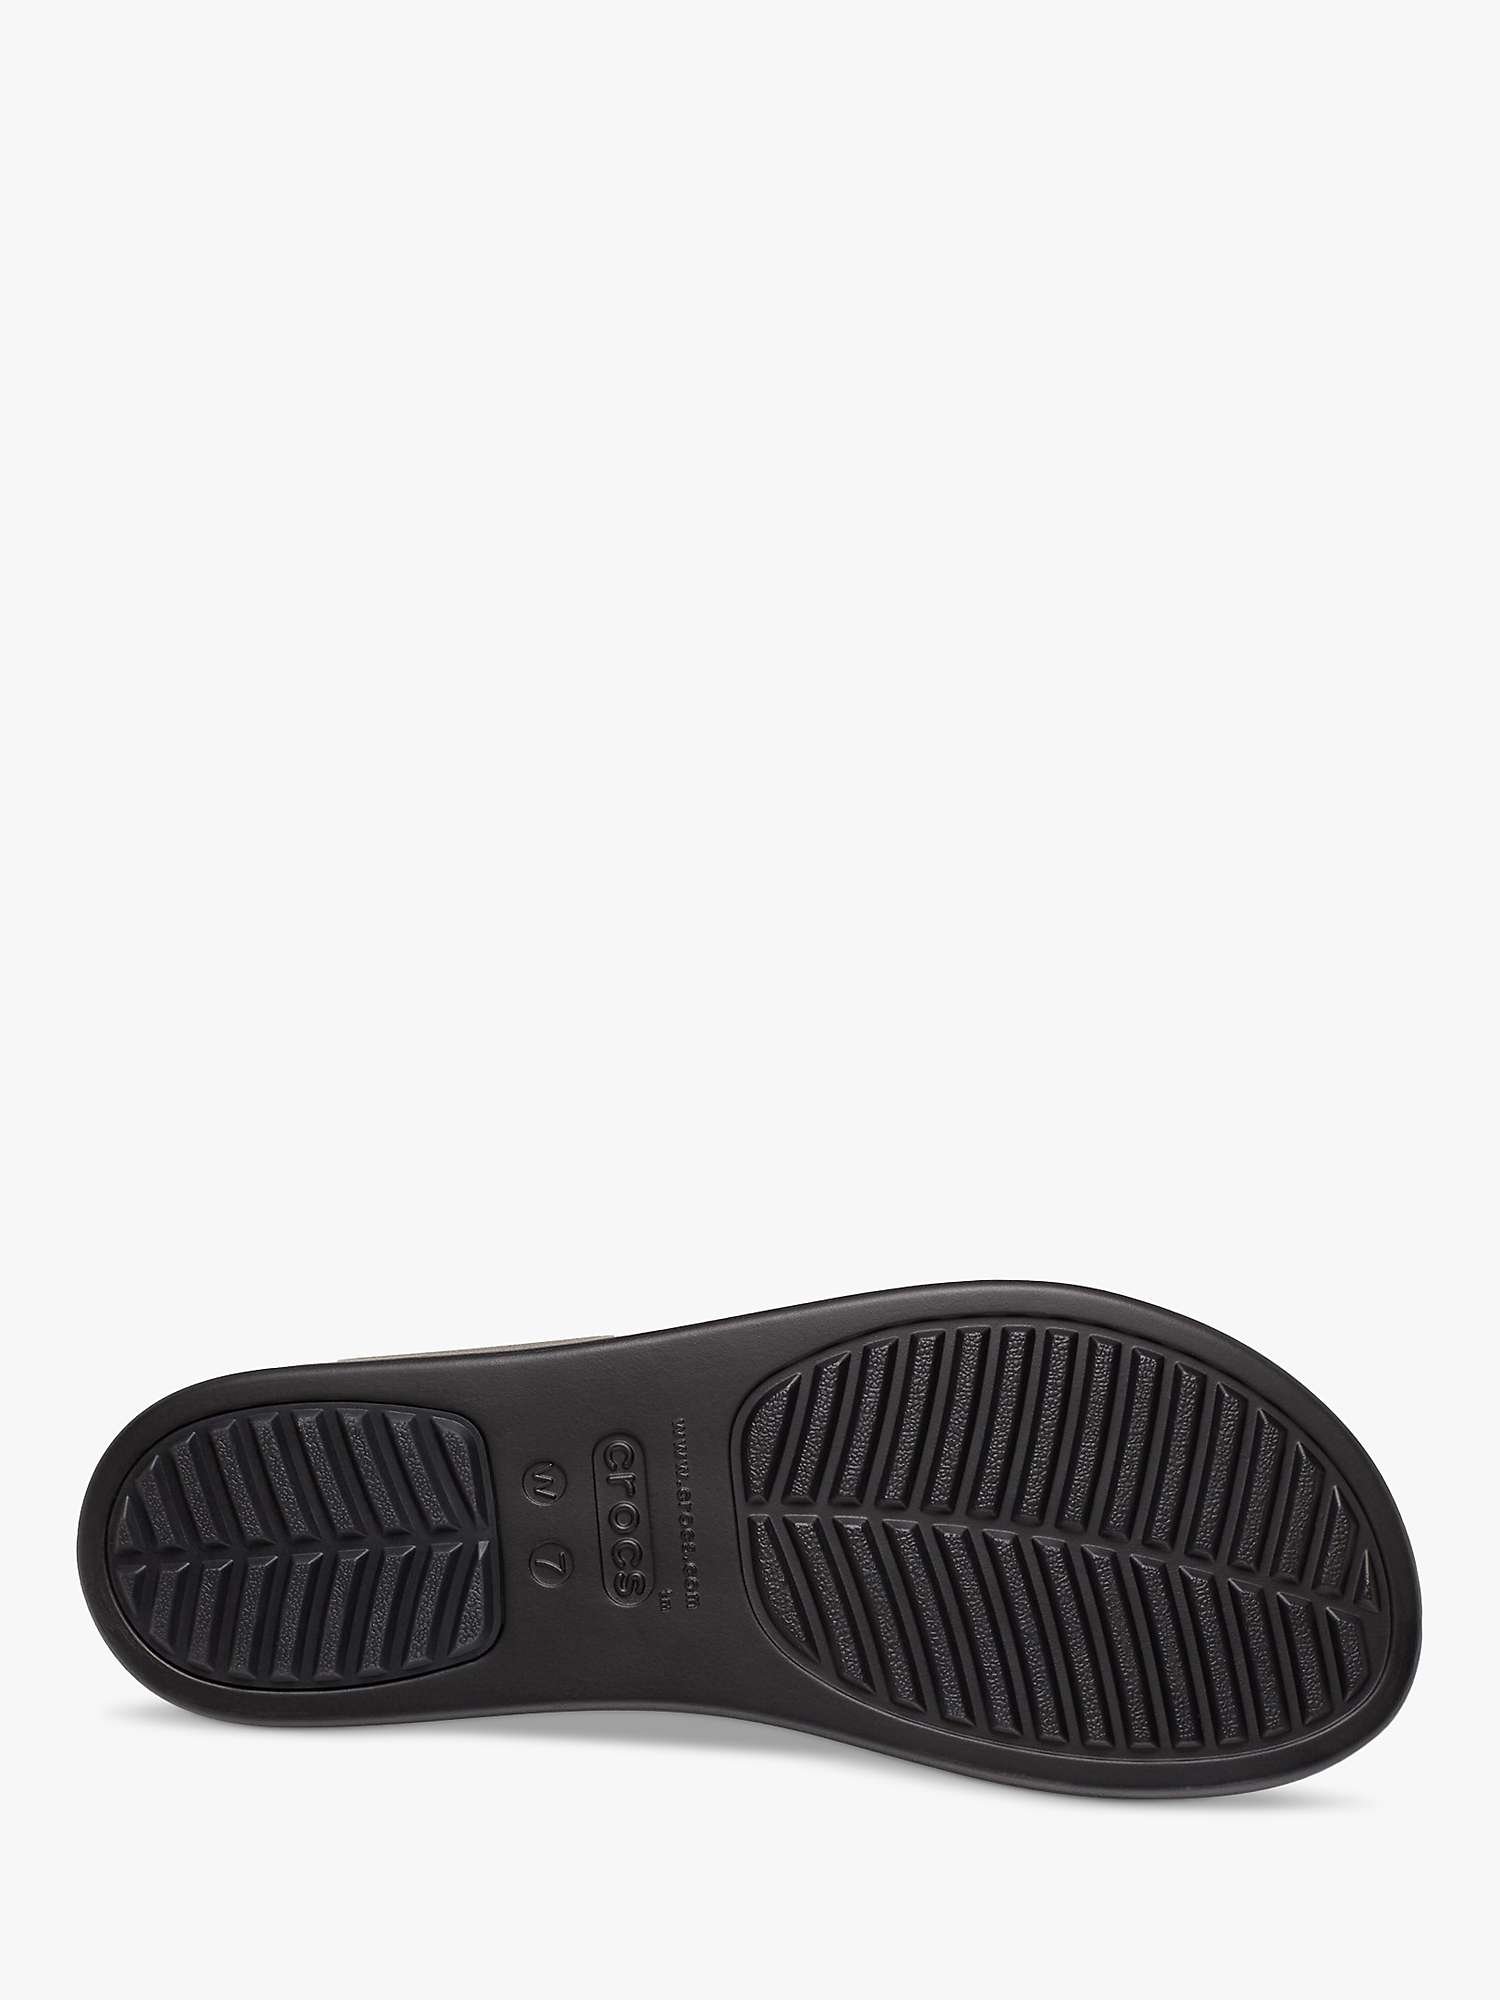 Buy Crocs Brooklyn Sandals, Black Online at johnlewis.com